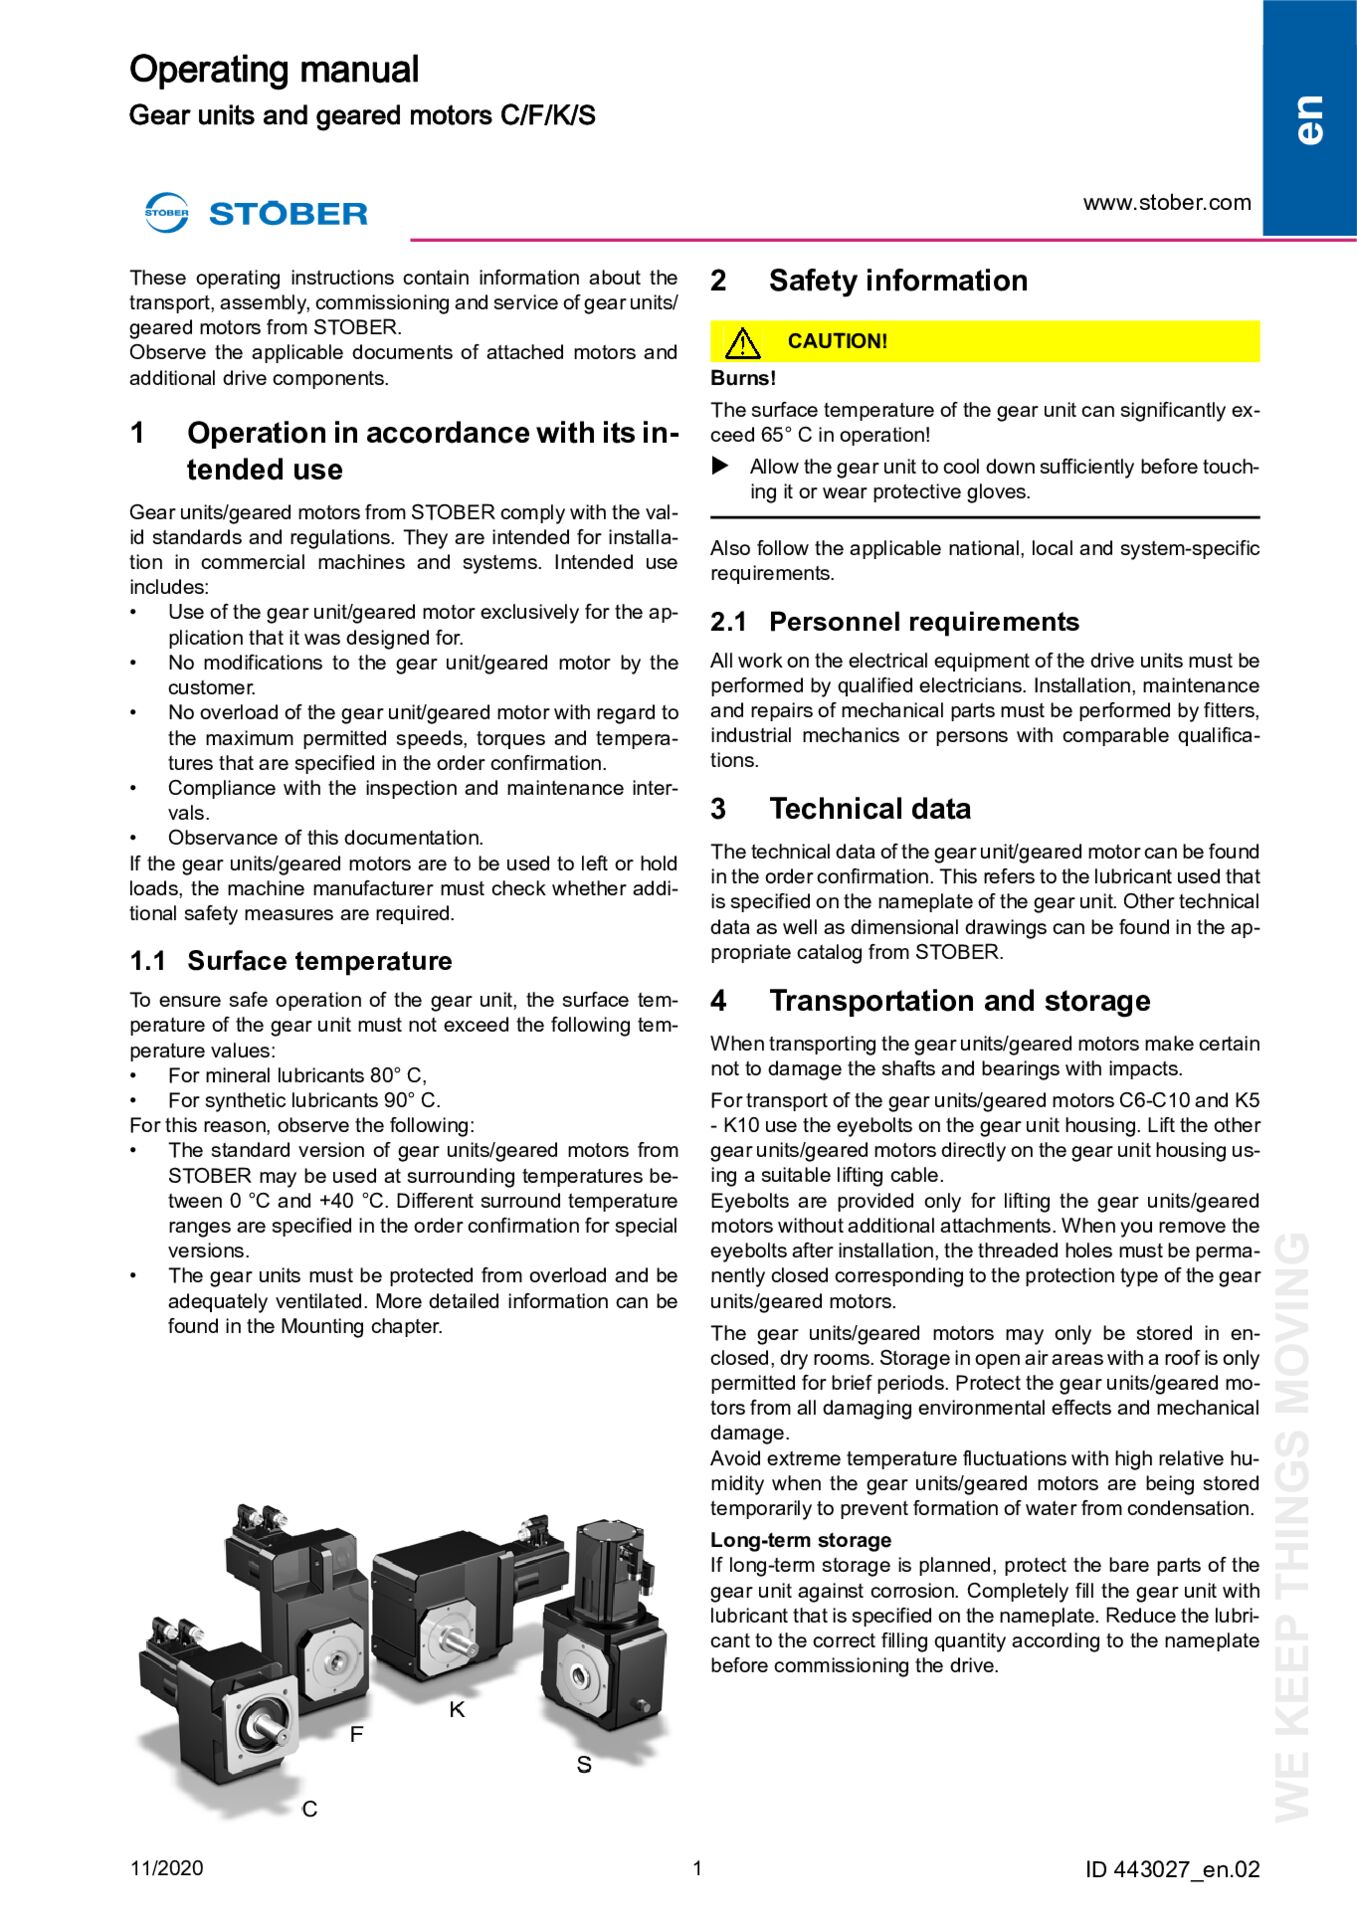 Operating manual Gear units and geared motors C F K S